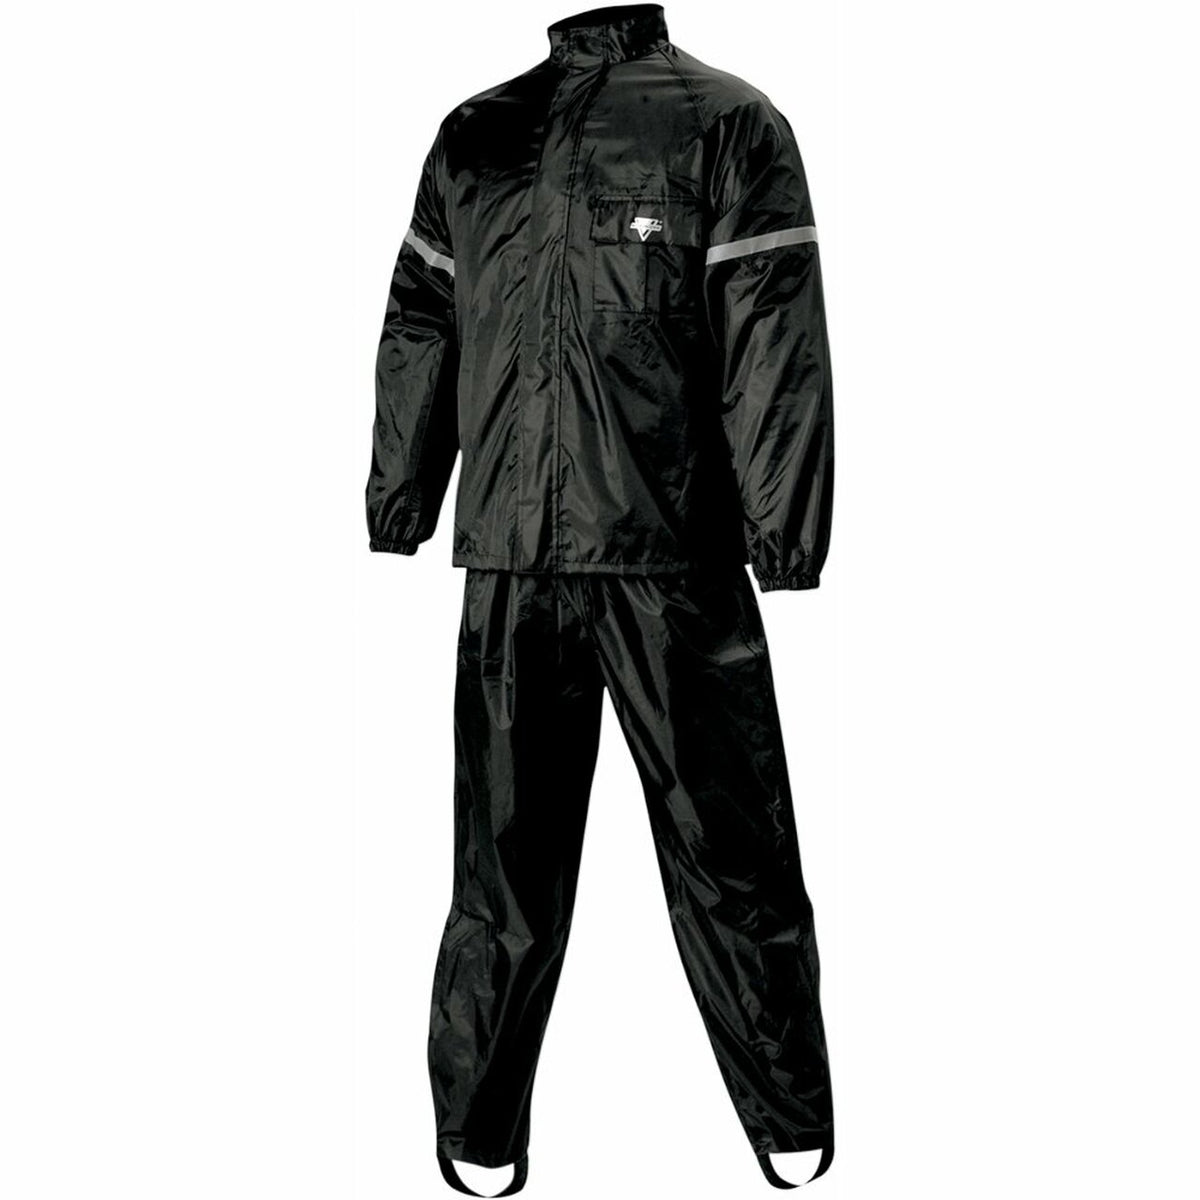 Nelson-Rigg WP-8000 Weather Pro Rain Suit